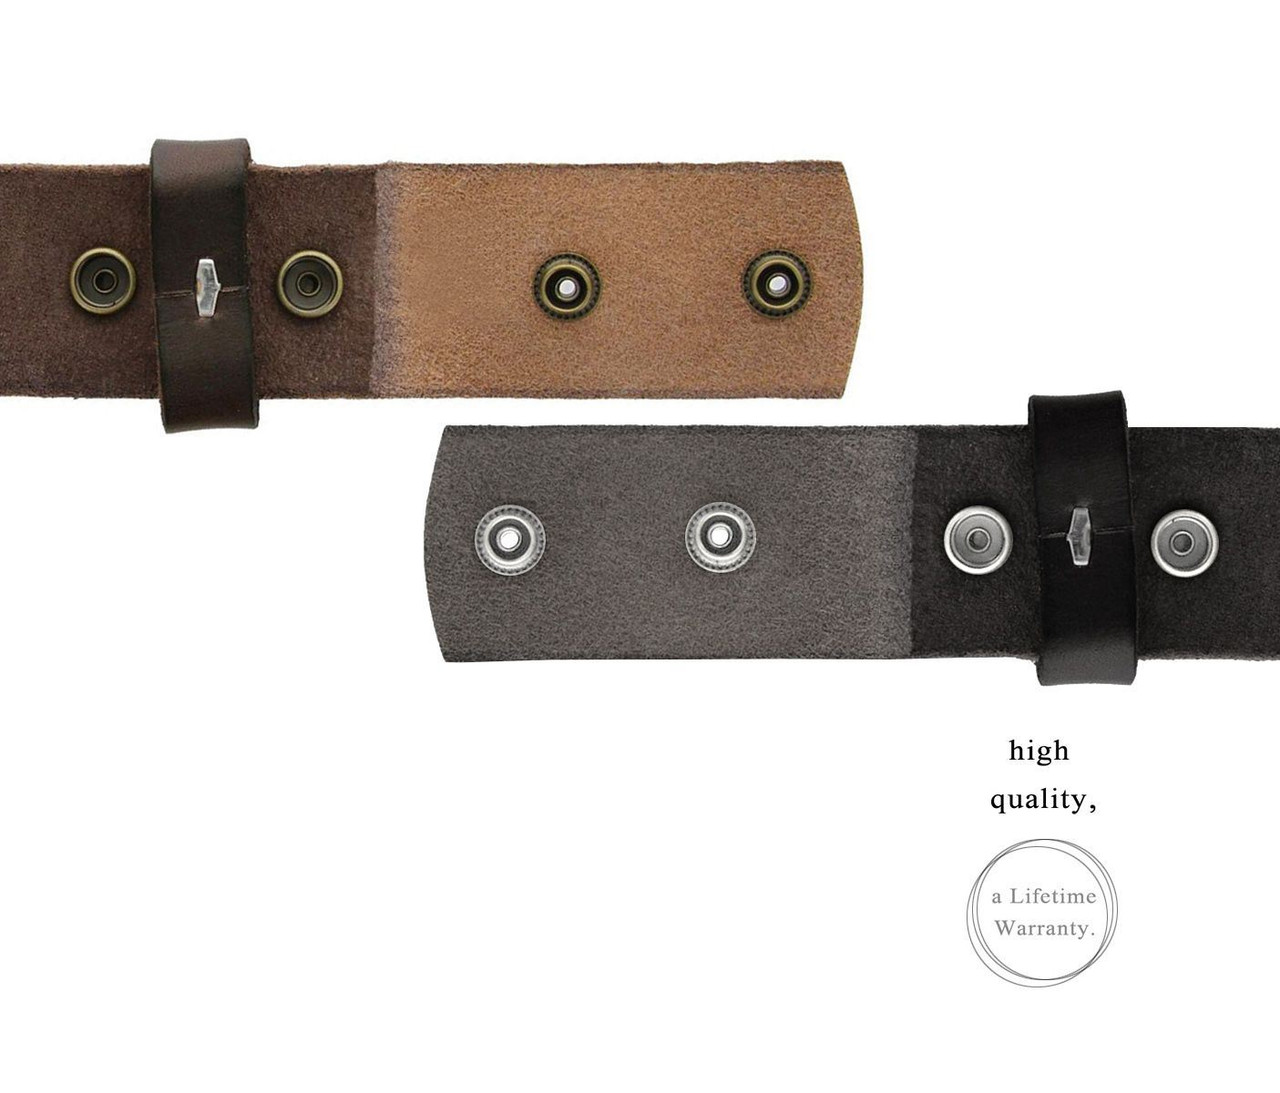 Ultra-thin single belt headless leather belt for men and women 3.2